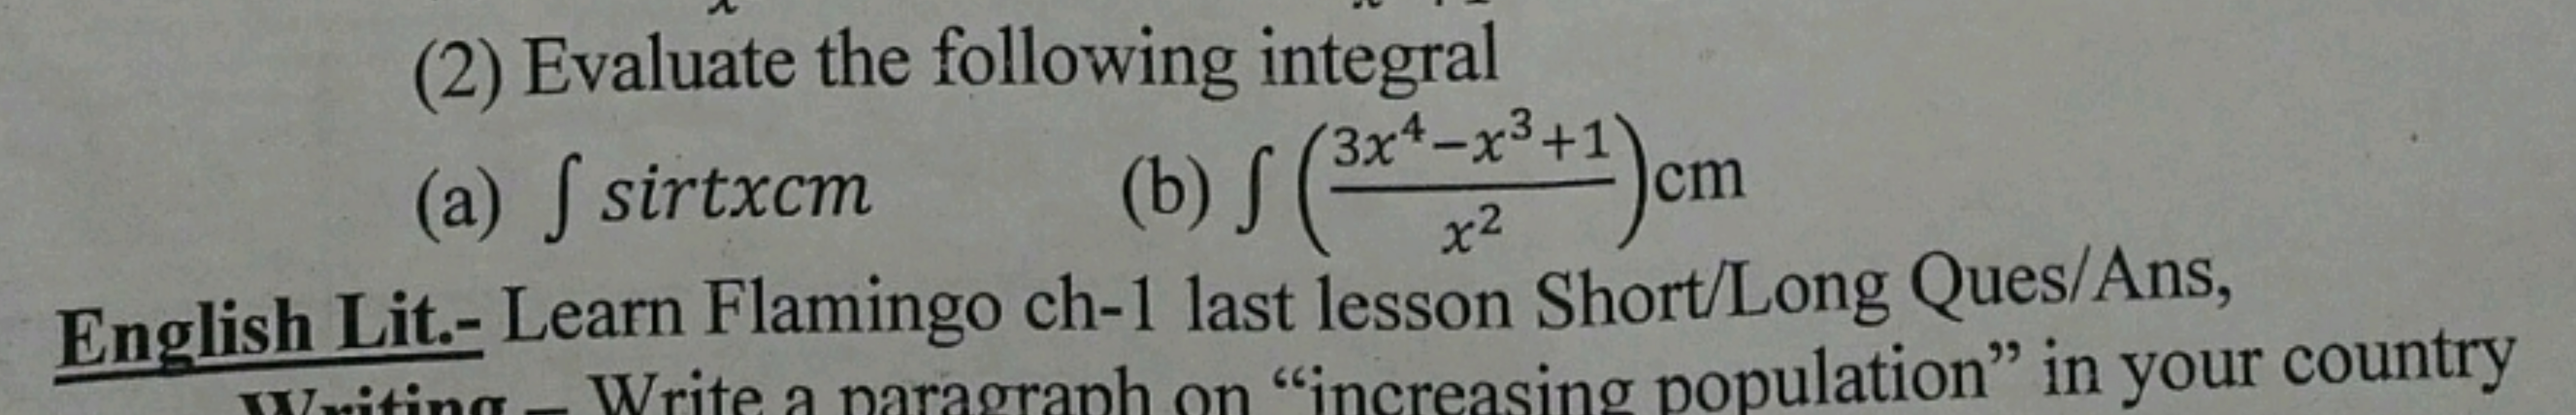 (2) Evaluate the following integral
(a) ∫ sirtxcm
(b) ∫(x23x4−x3+1​)cm